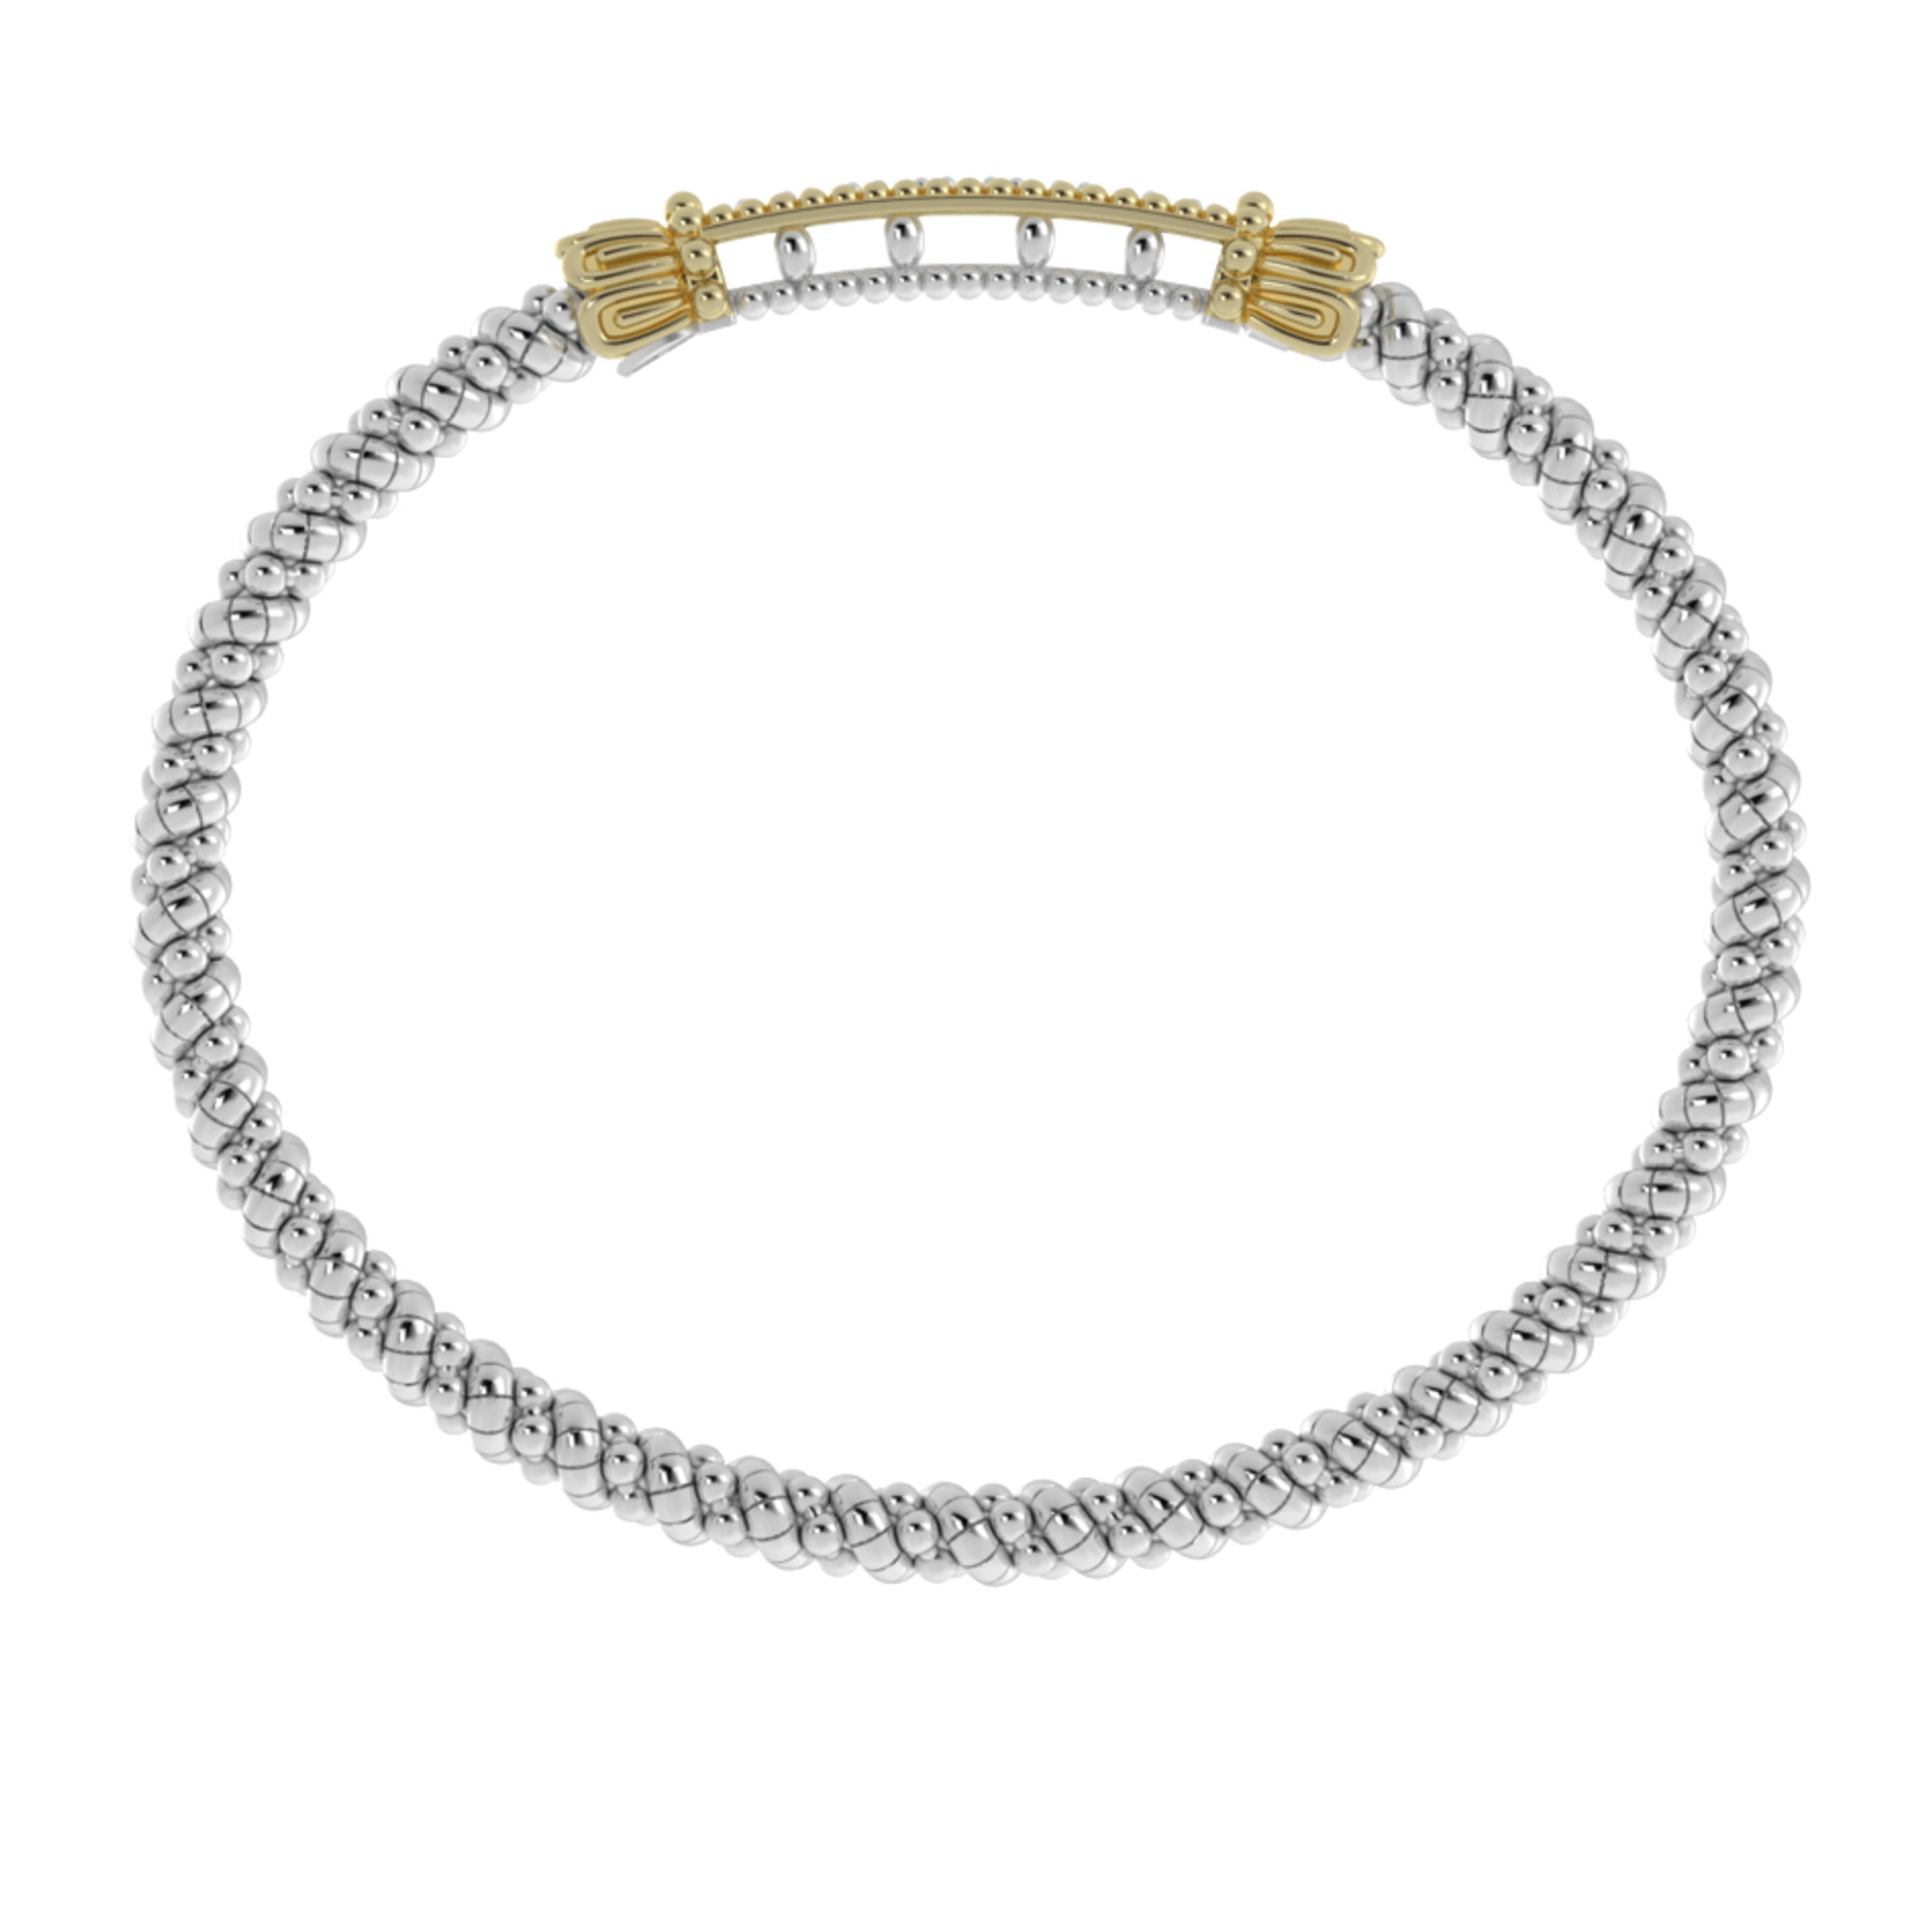 Vahan Diamond Bracelet - Style 22445 - 14k Yellow Gold & Sterling Silver